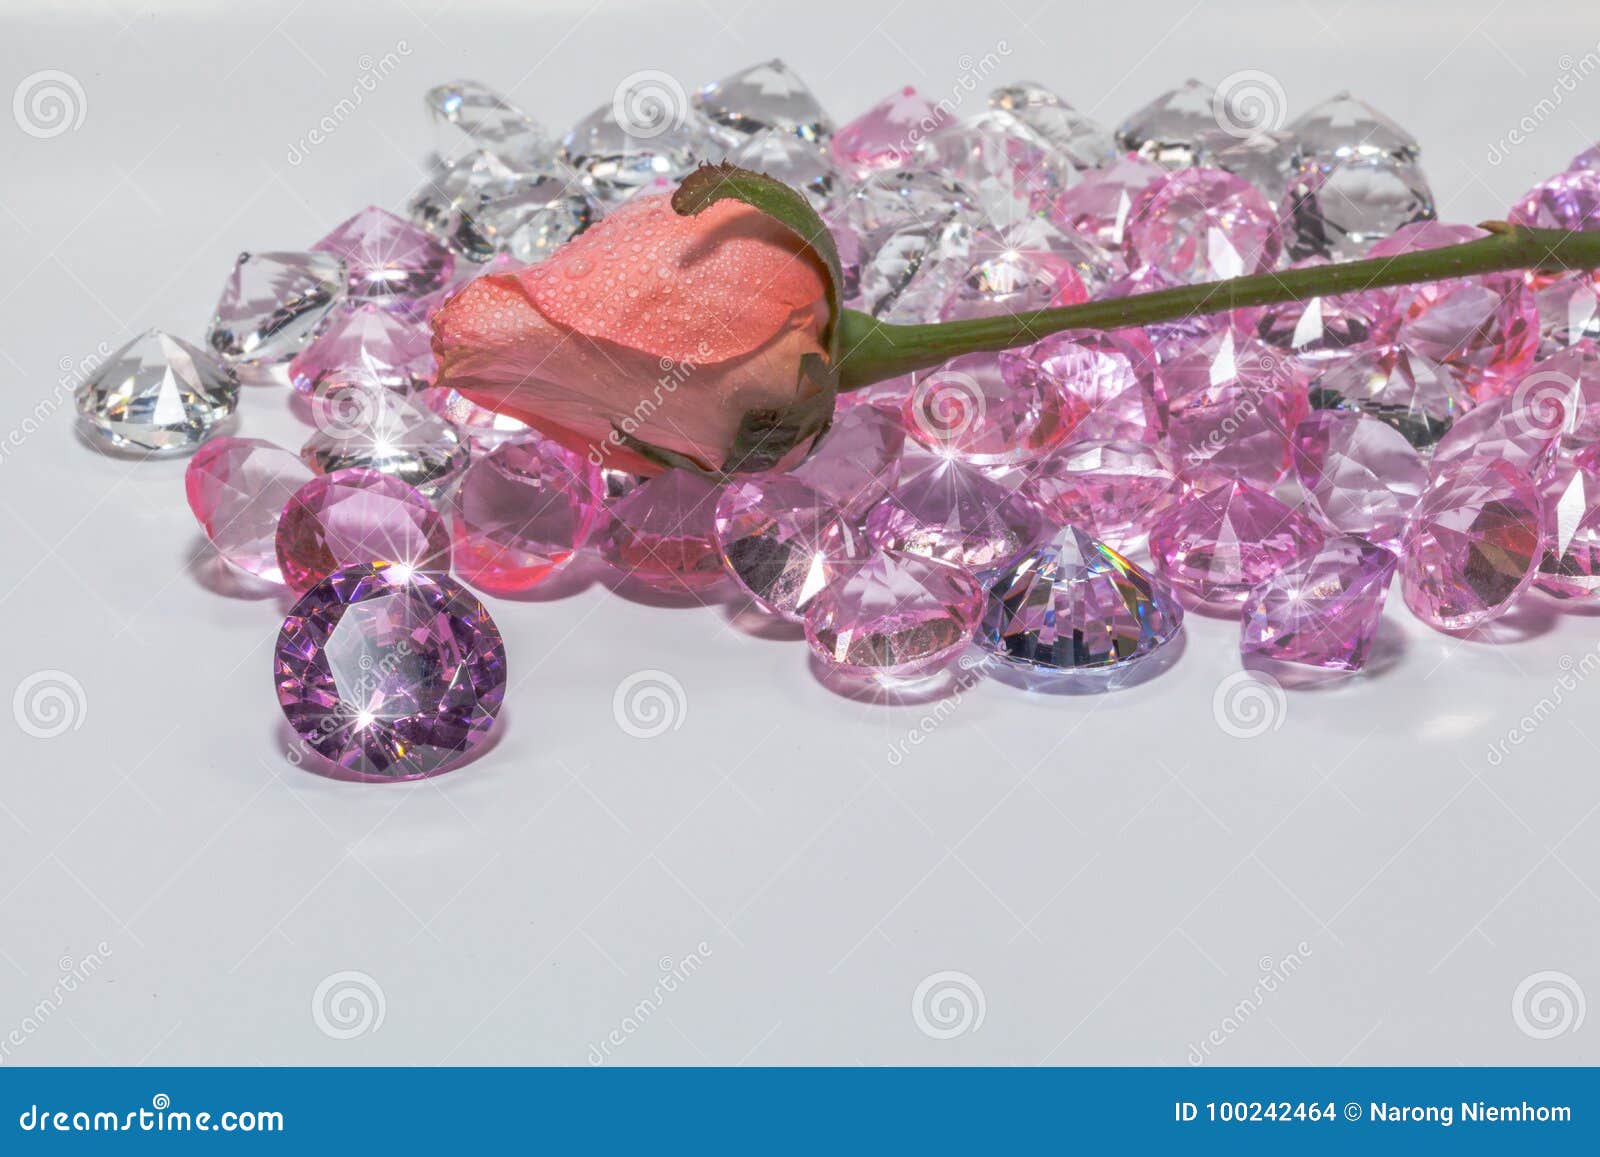 the purple amethys gemstones shine light pendant